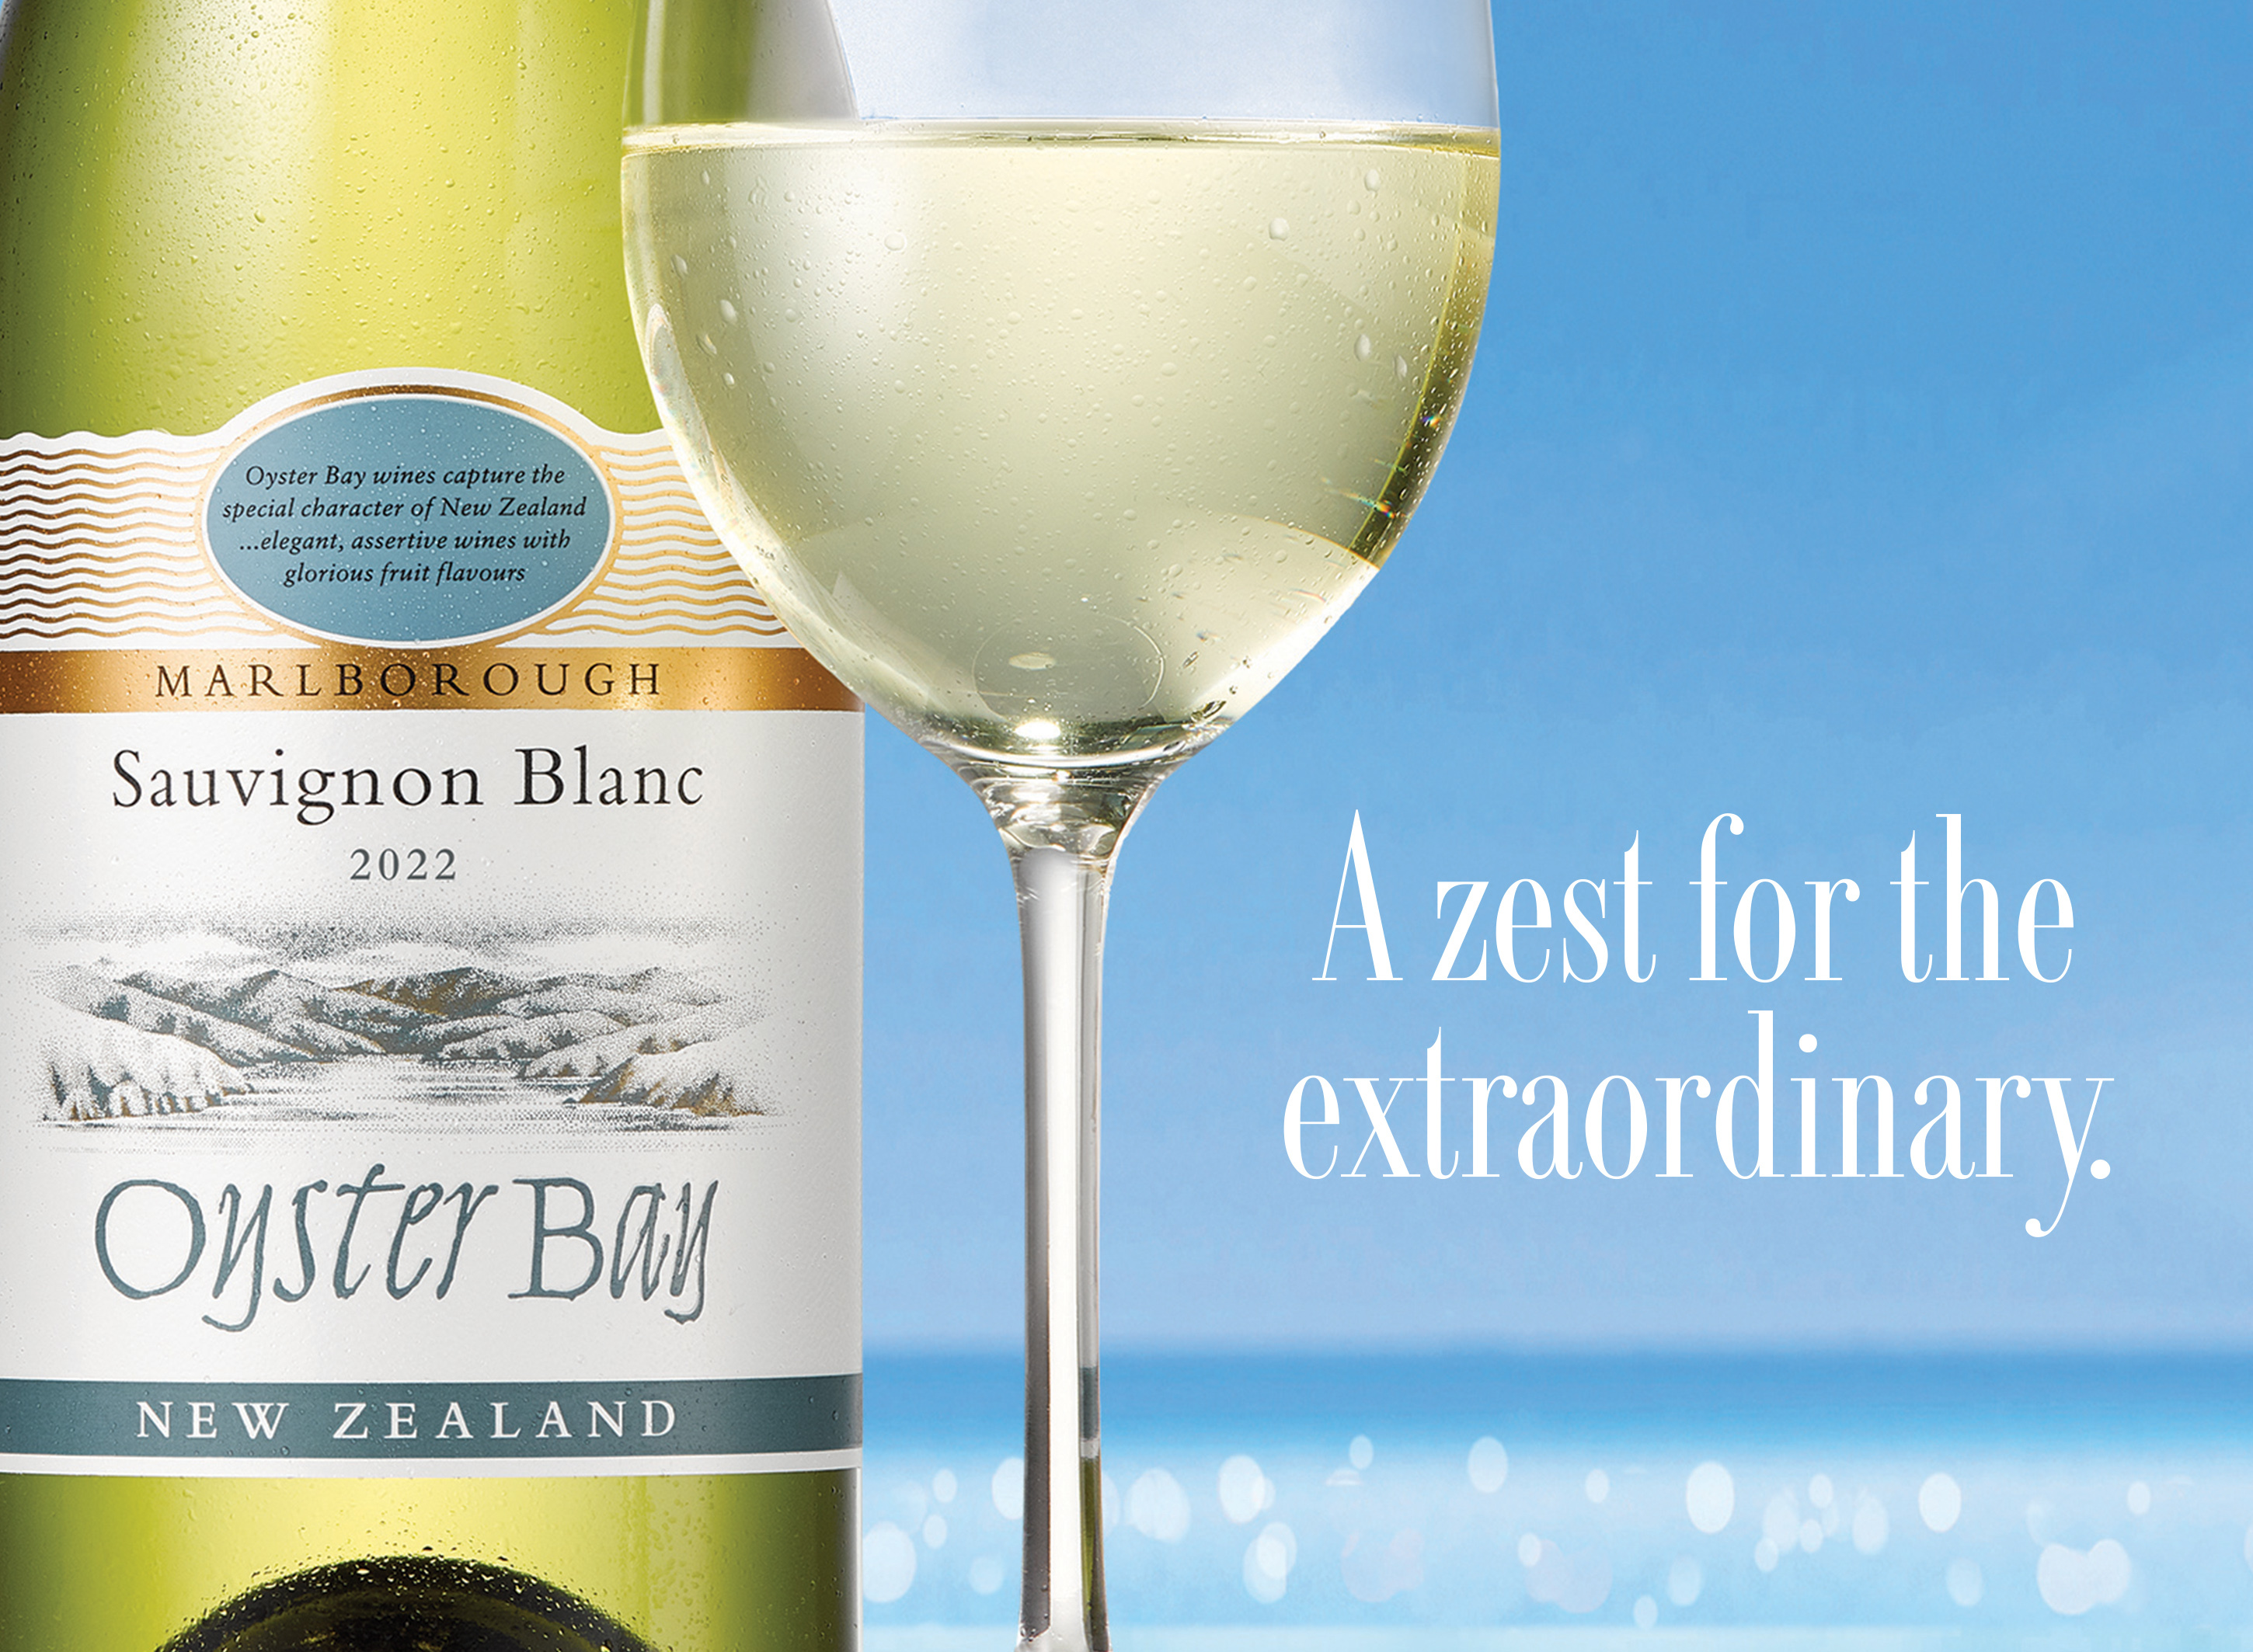 New Zealand Marlborough New Zealand Sauvignon Blanc Wine bottle and glass